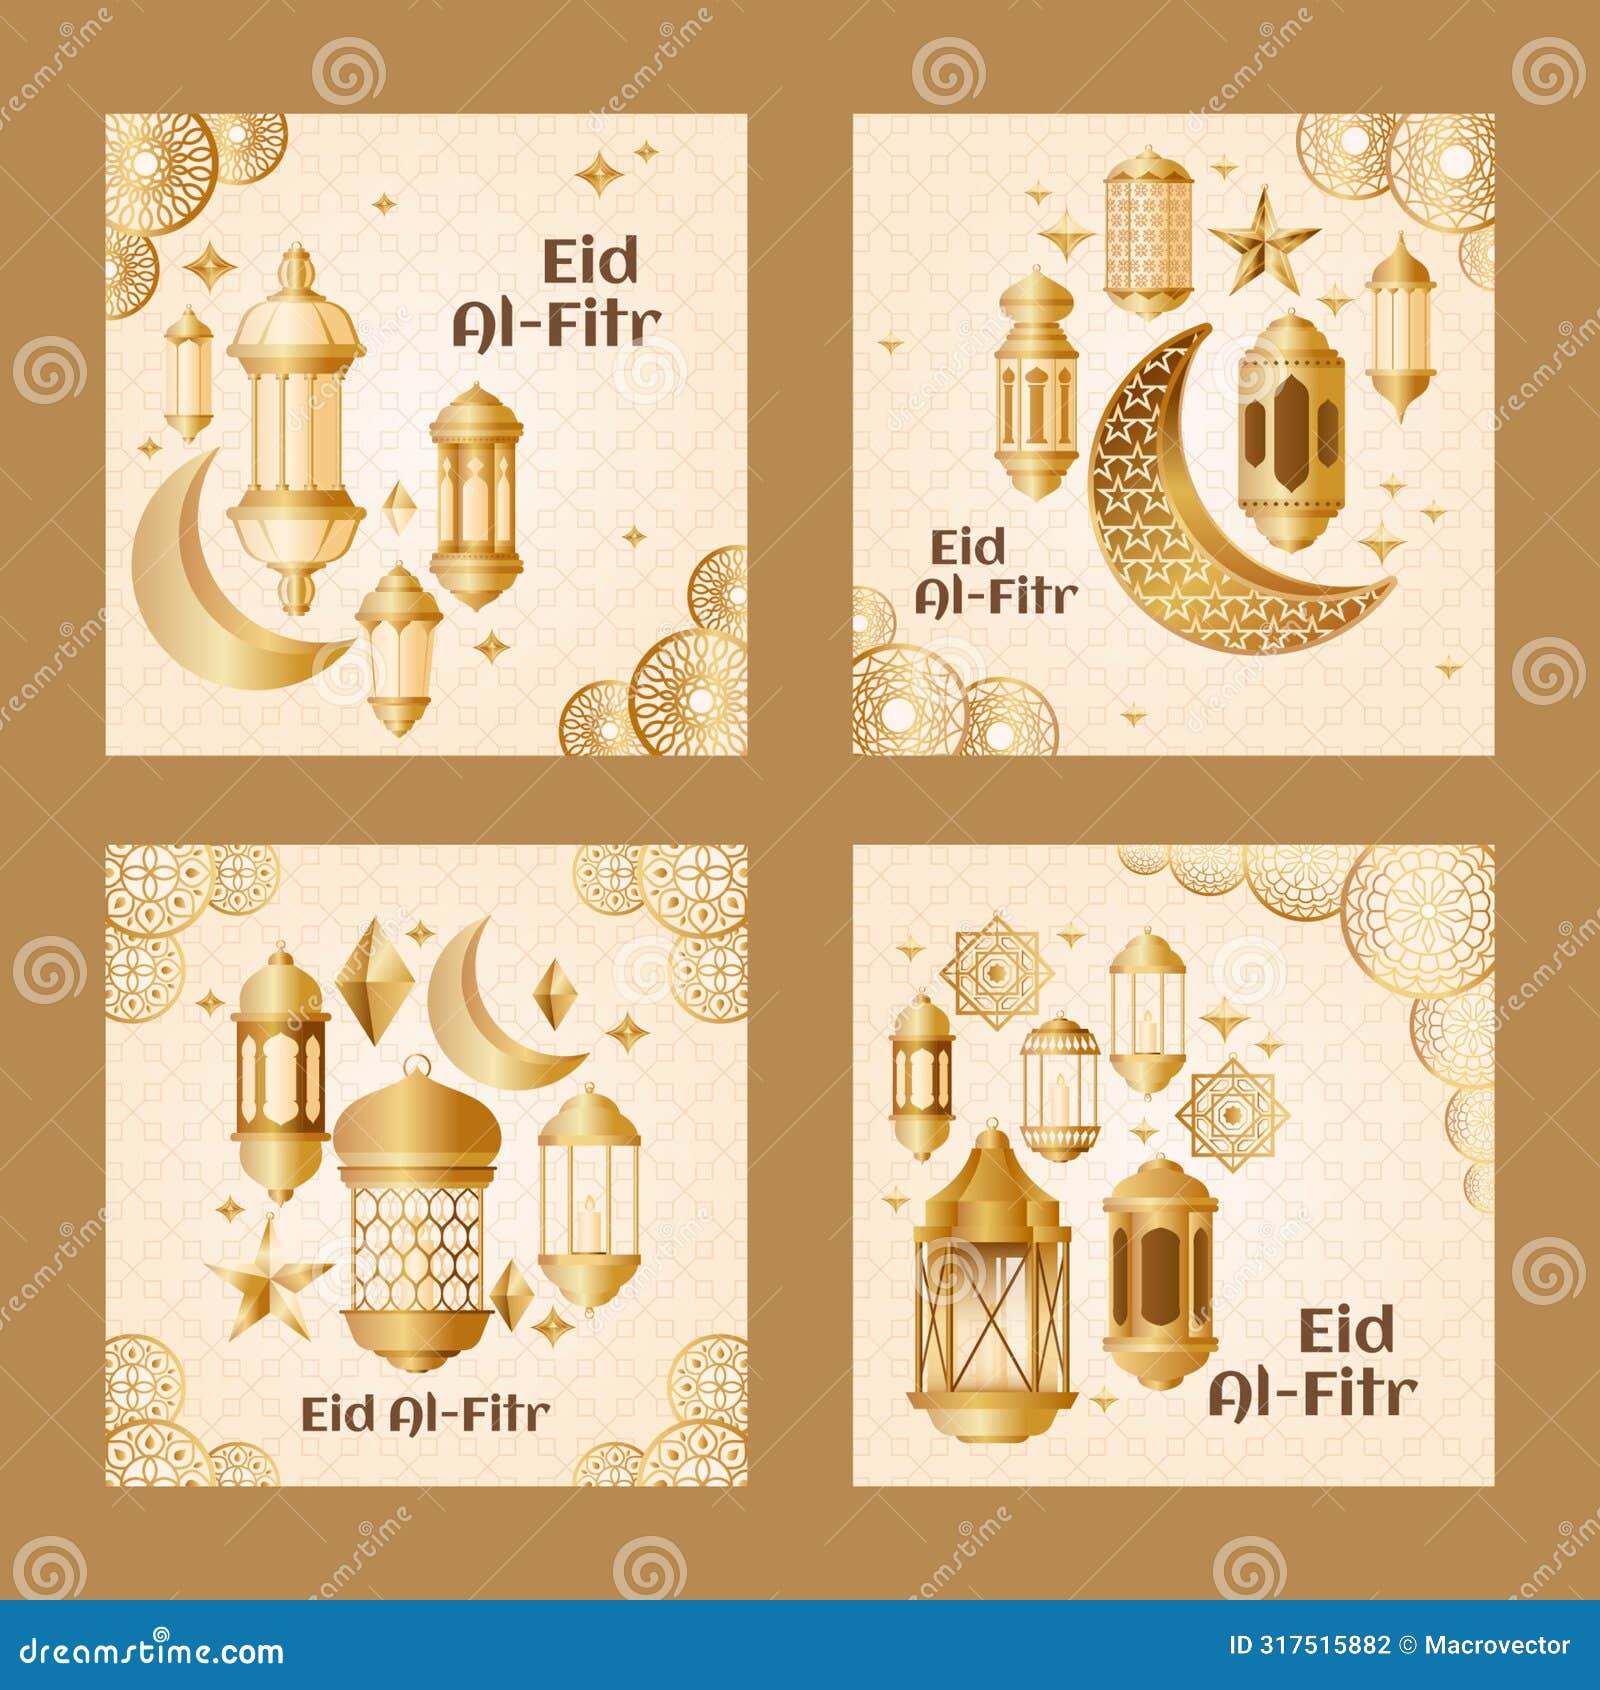 eid al fitr cards in gradient 